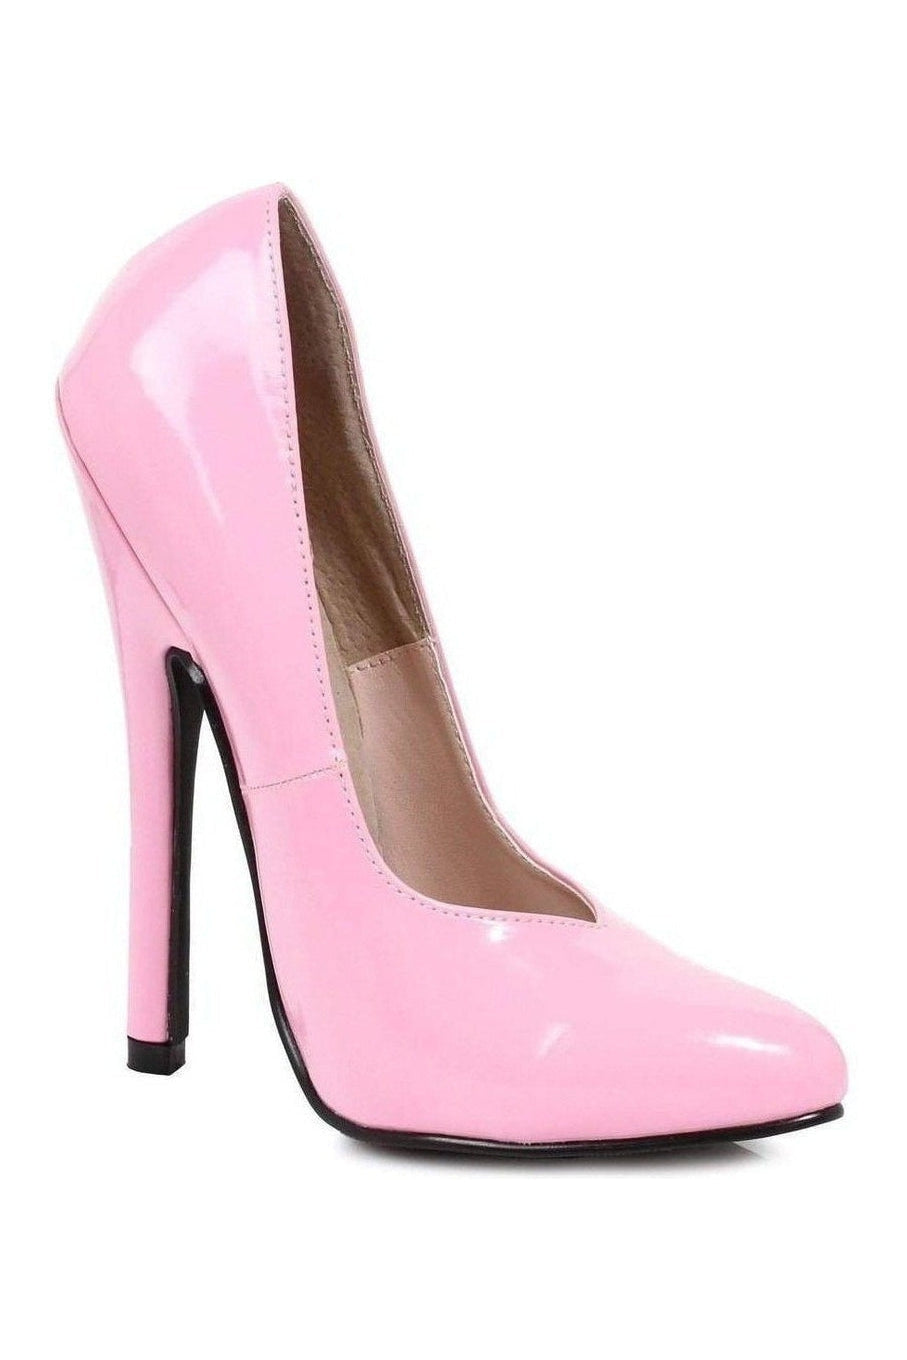 8260 Pump | Pink Patent-Pumps- Stripper Shoes at SEXYSHOES.COM